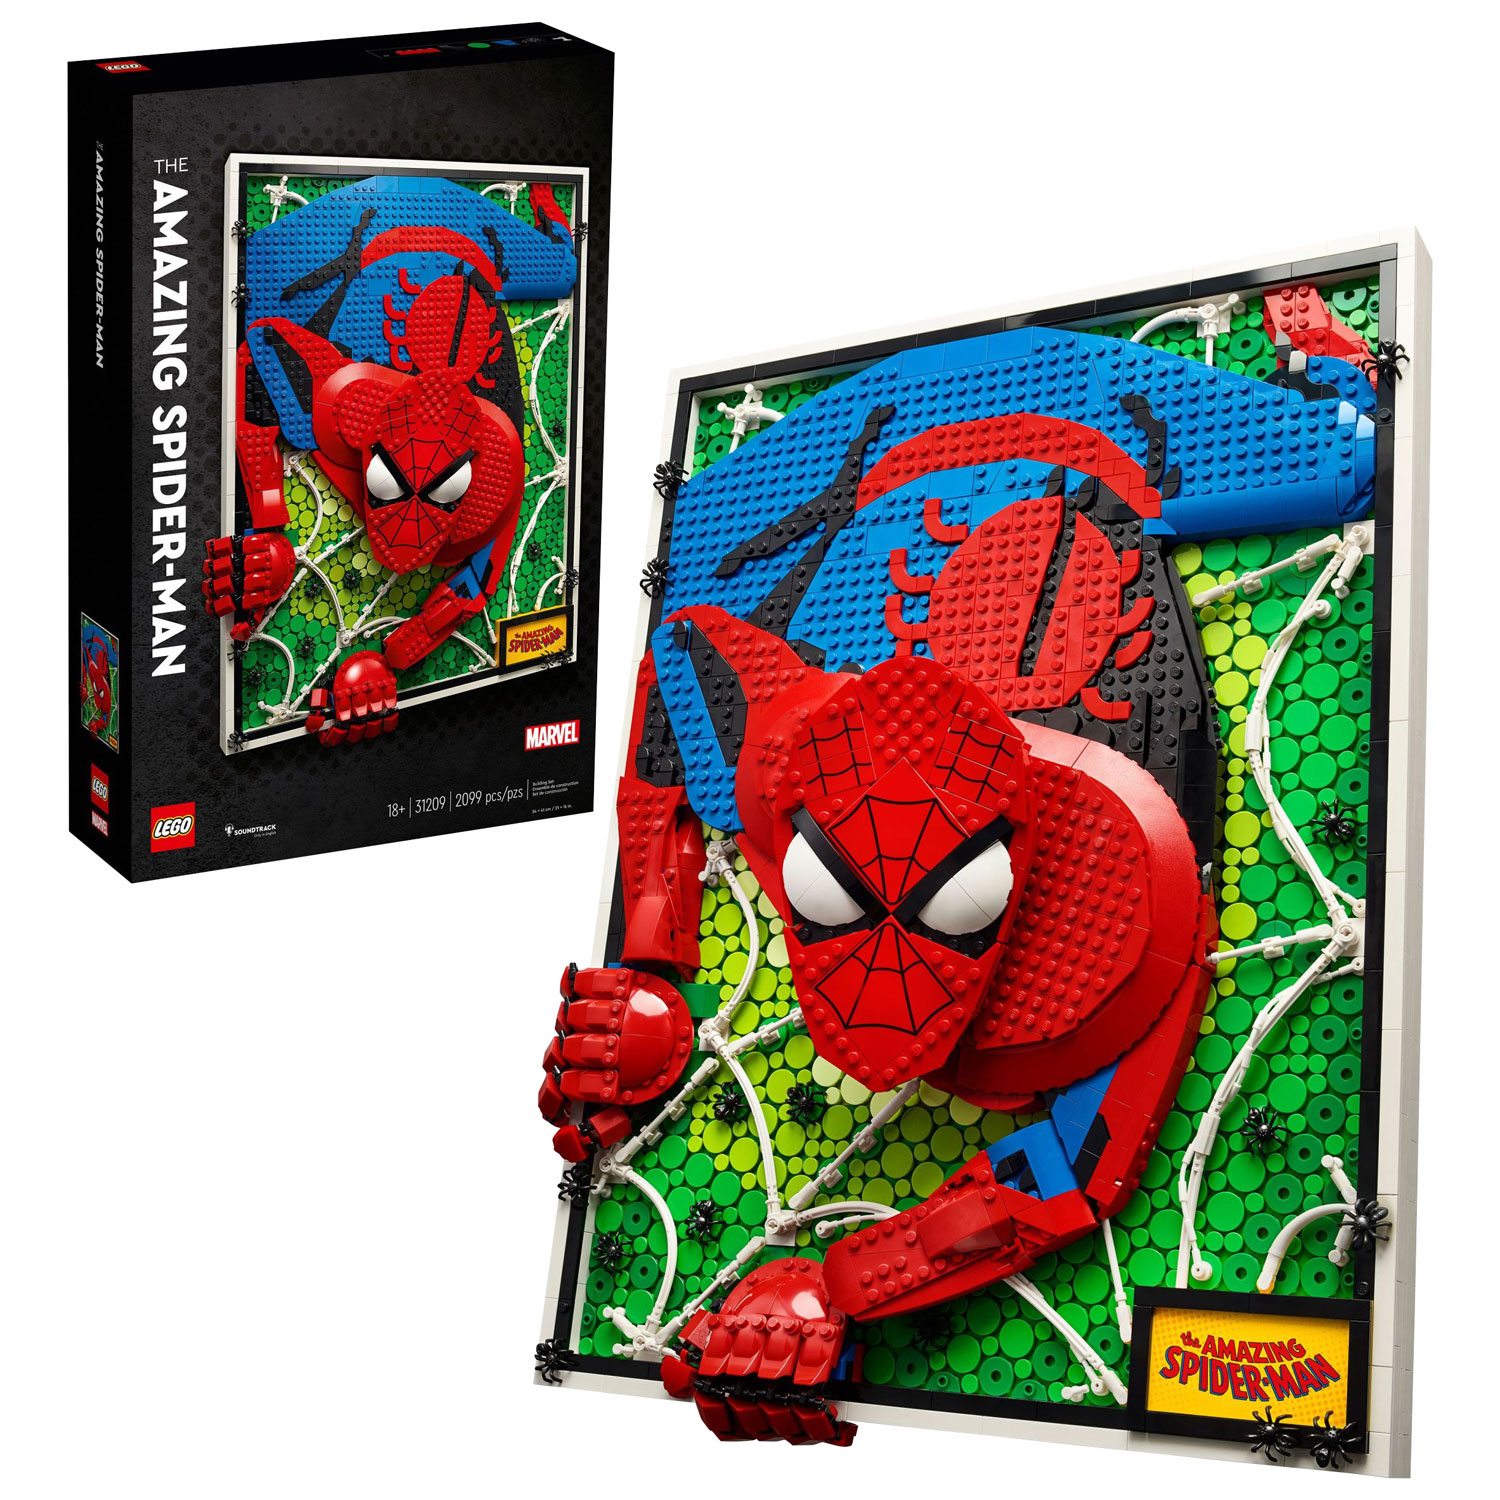 LEGO ART: The Amazing Spider-Man - 2099 Pieces (31209)